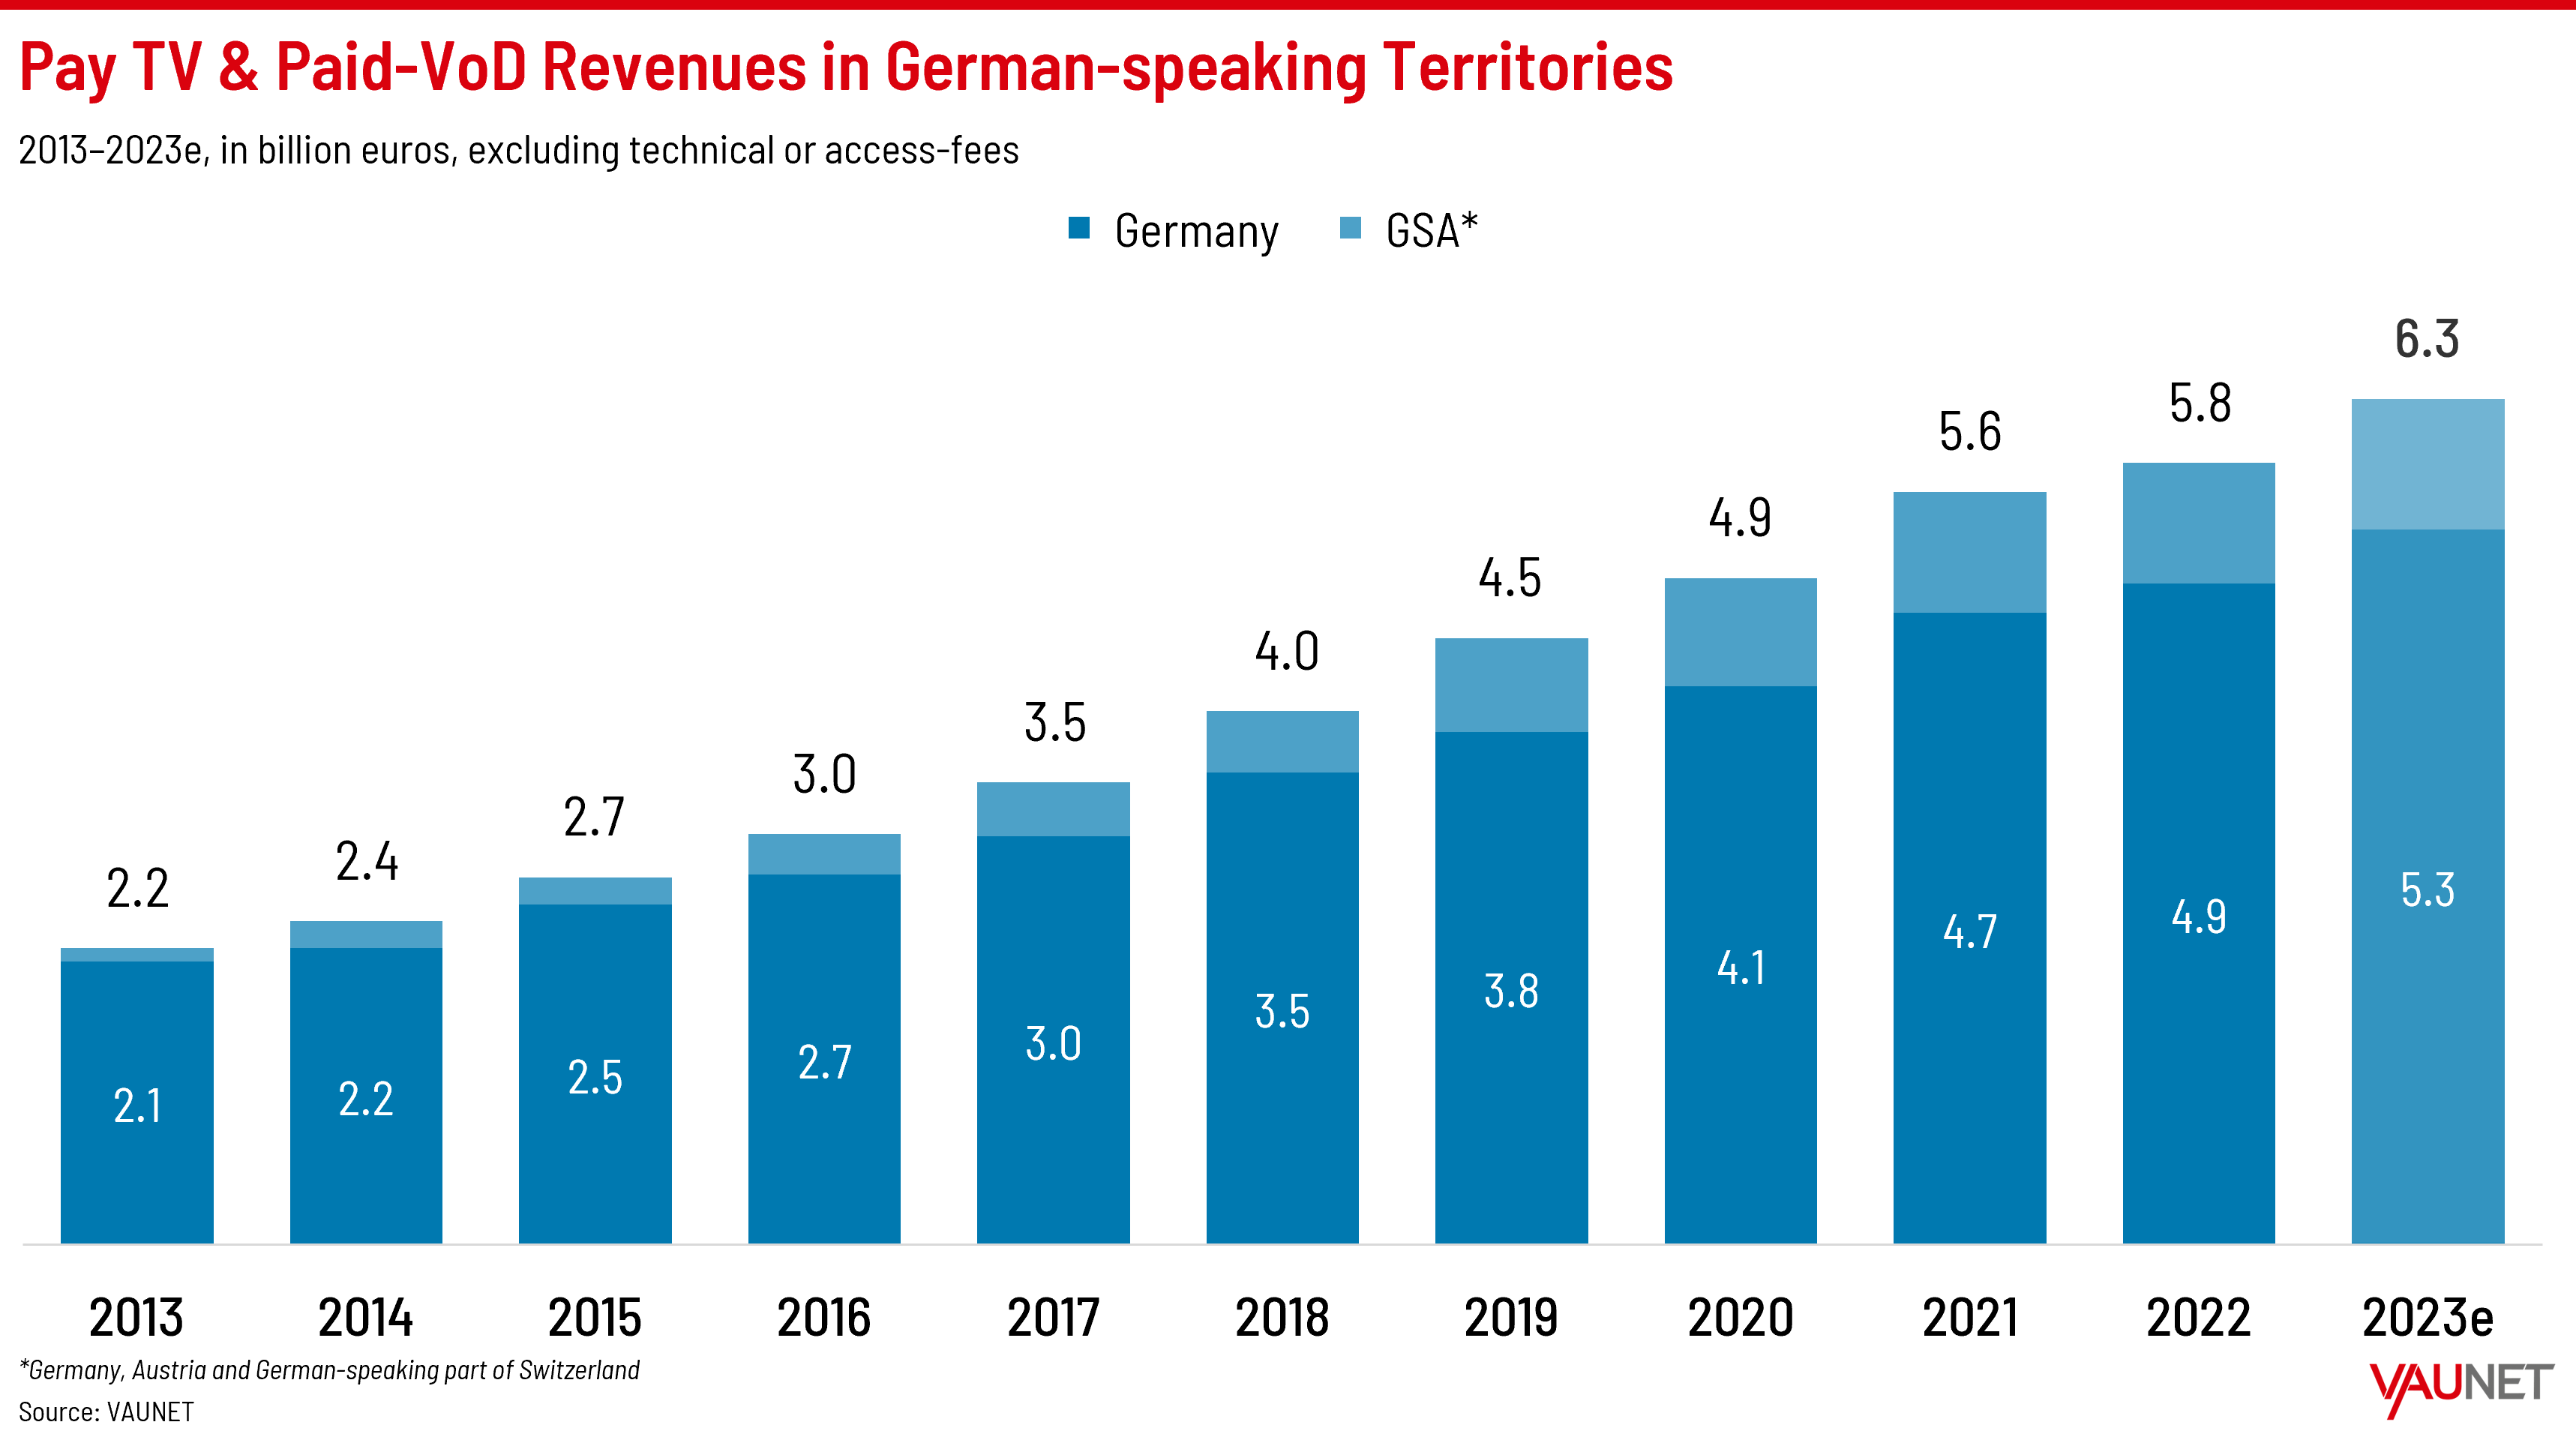 Pay TV and Paid-VOD Revenues in German-speaking Territories - Germany, GSA - 2013-2023